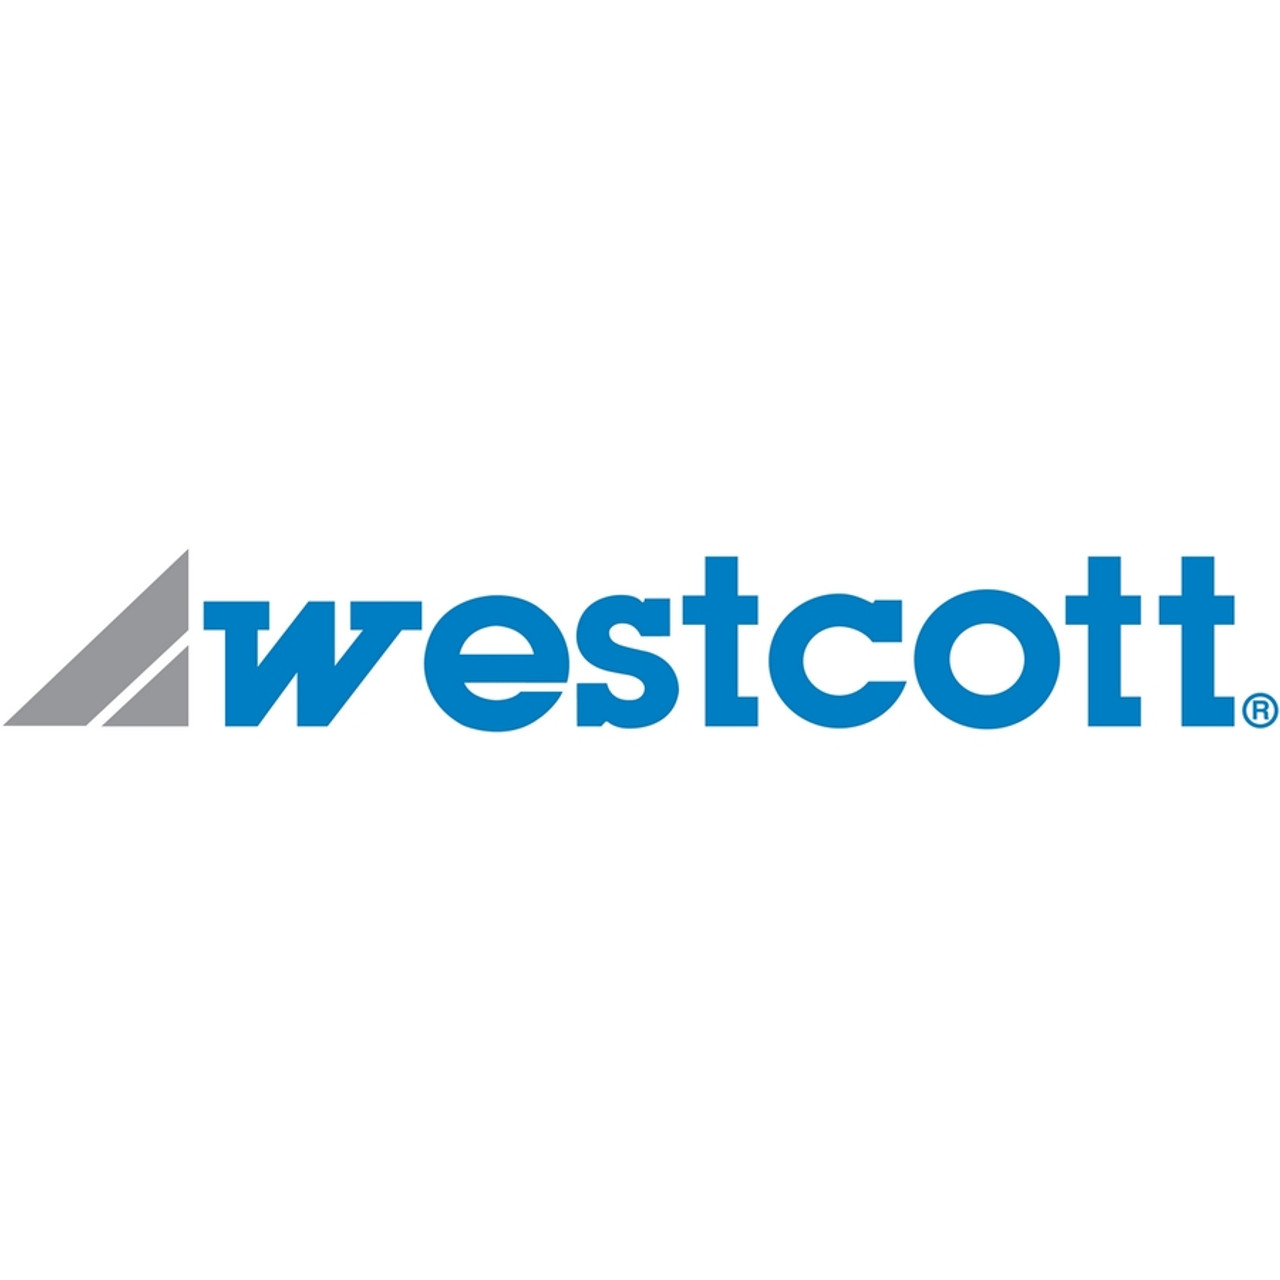 Westcott All-Purpose Value Stainless Steel Scissors, 8, Straight, Pink  Ribbon